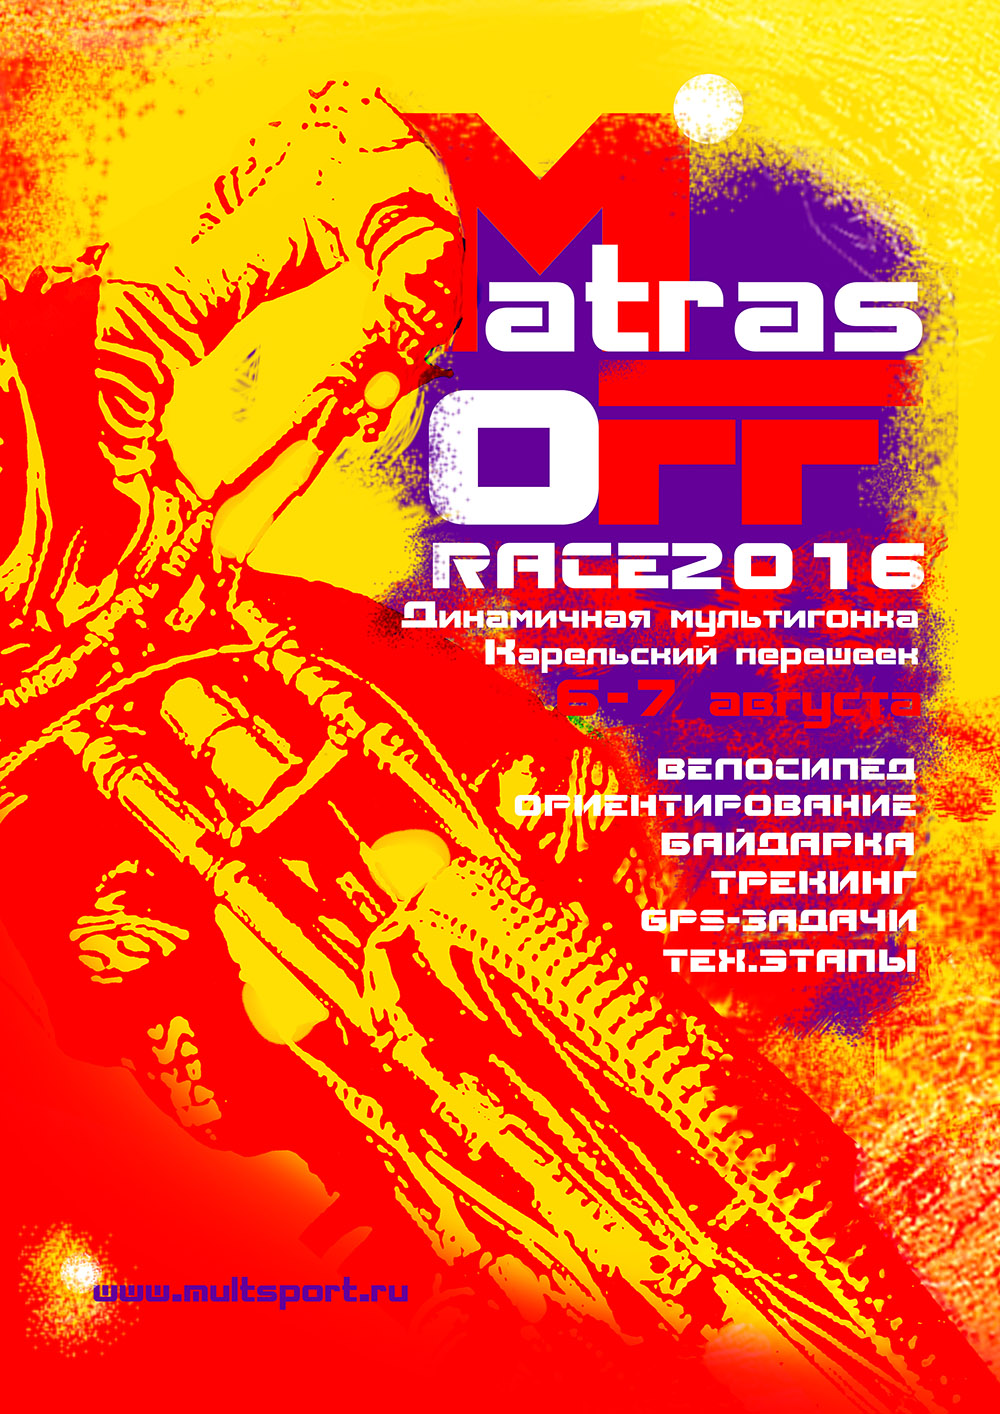 Анонс соревнований MatrasOFF Race - 2016